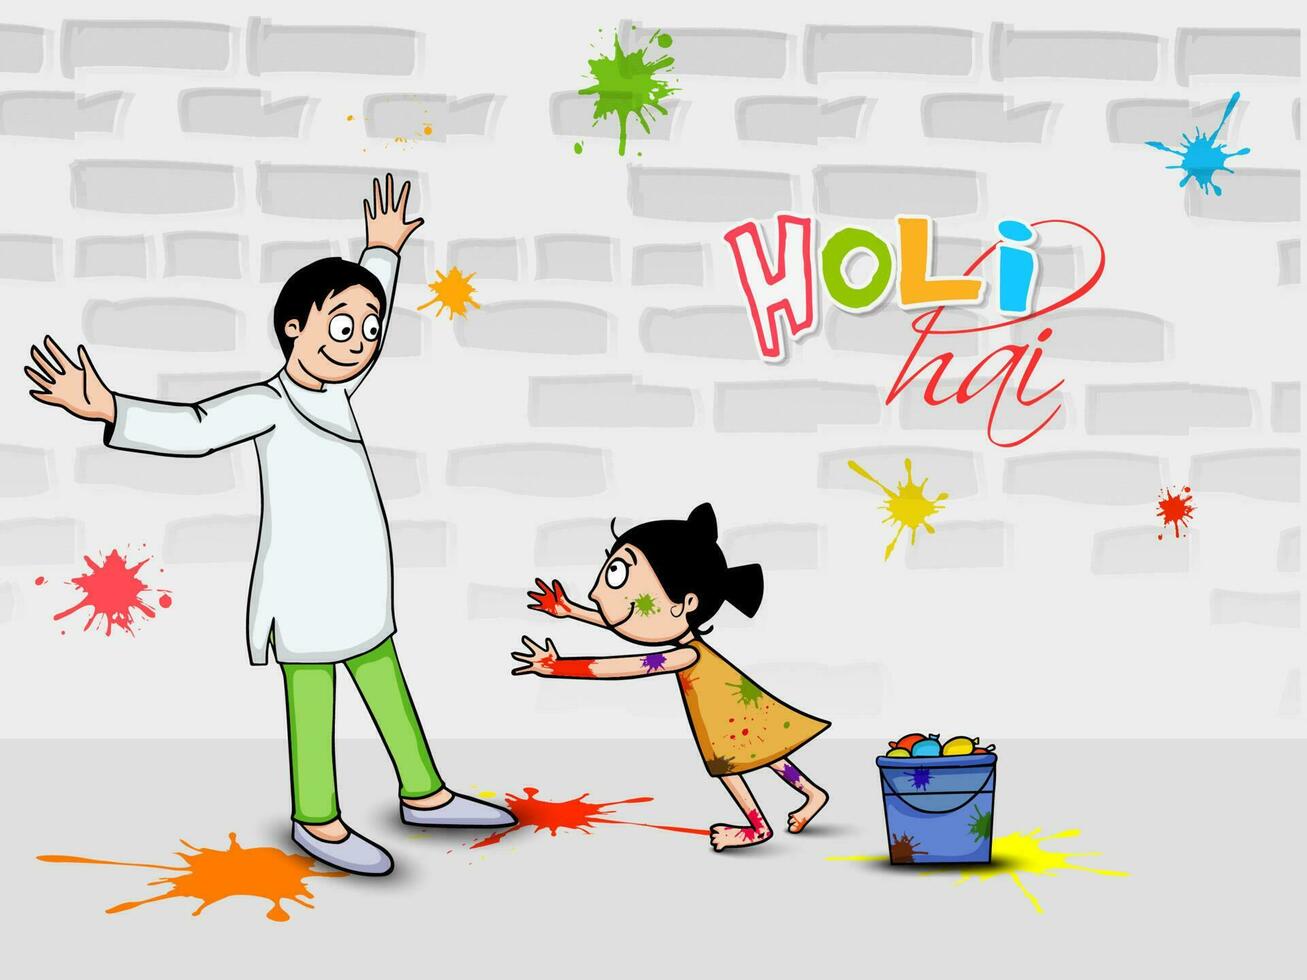 Festival of Colors, Happy Holi Concept. vector